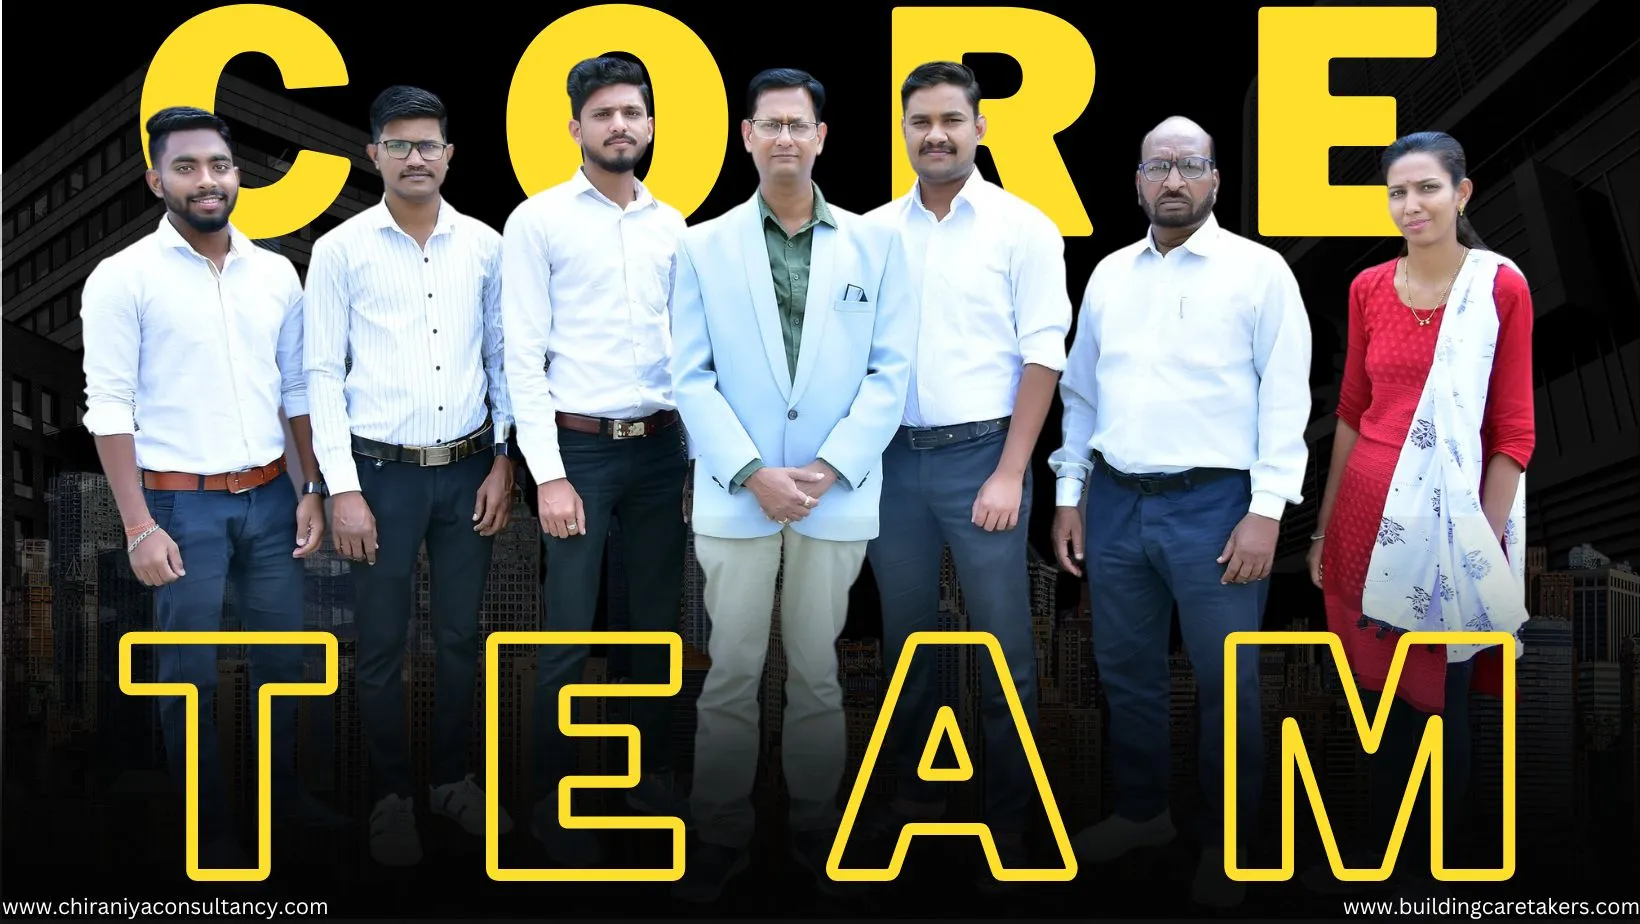 Chiraniya Consultancy Team